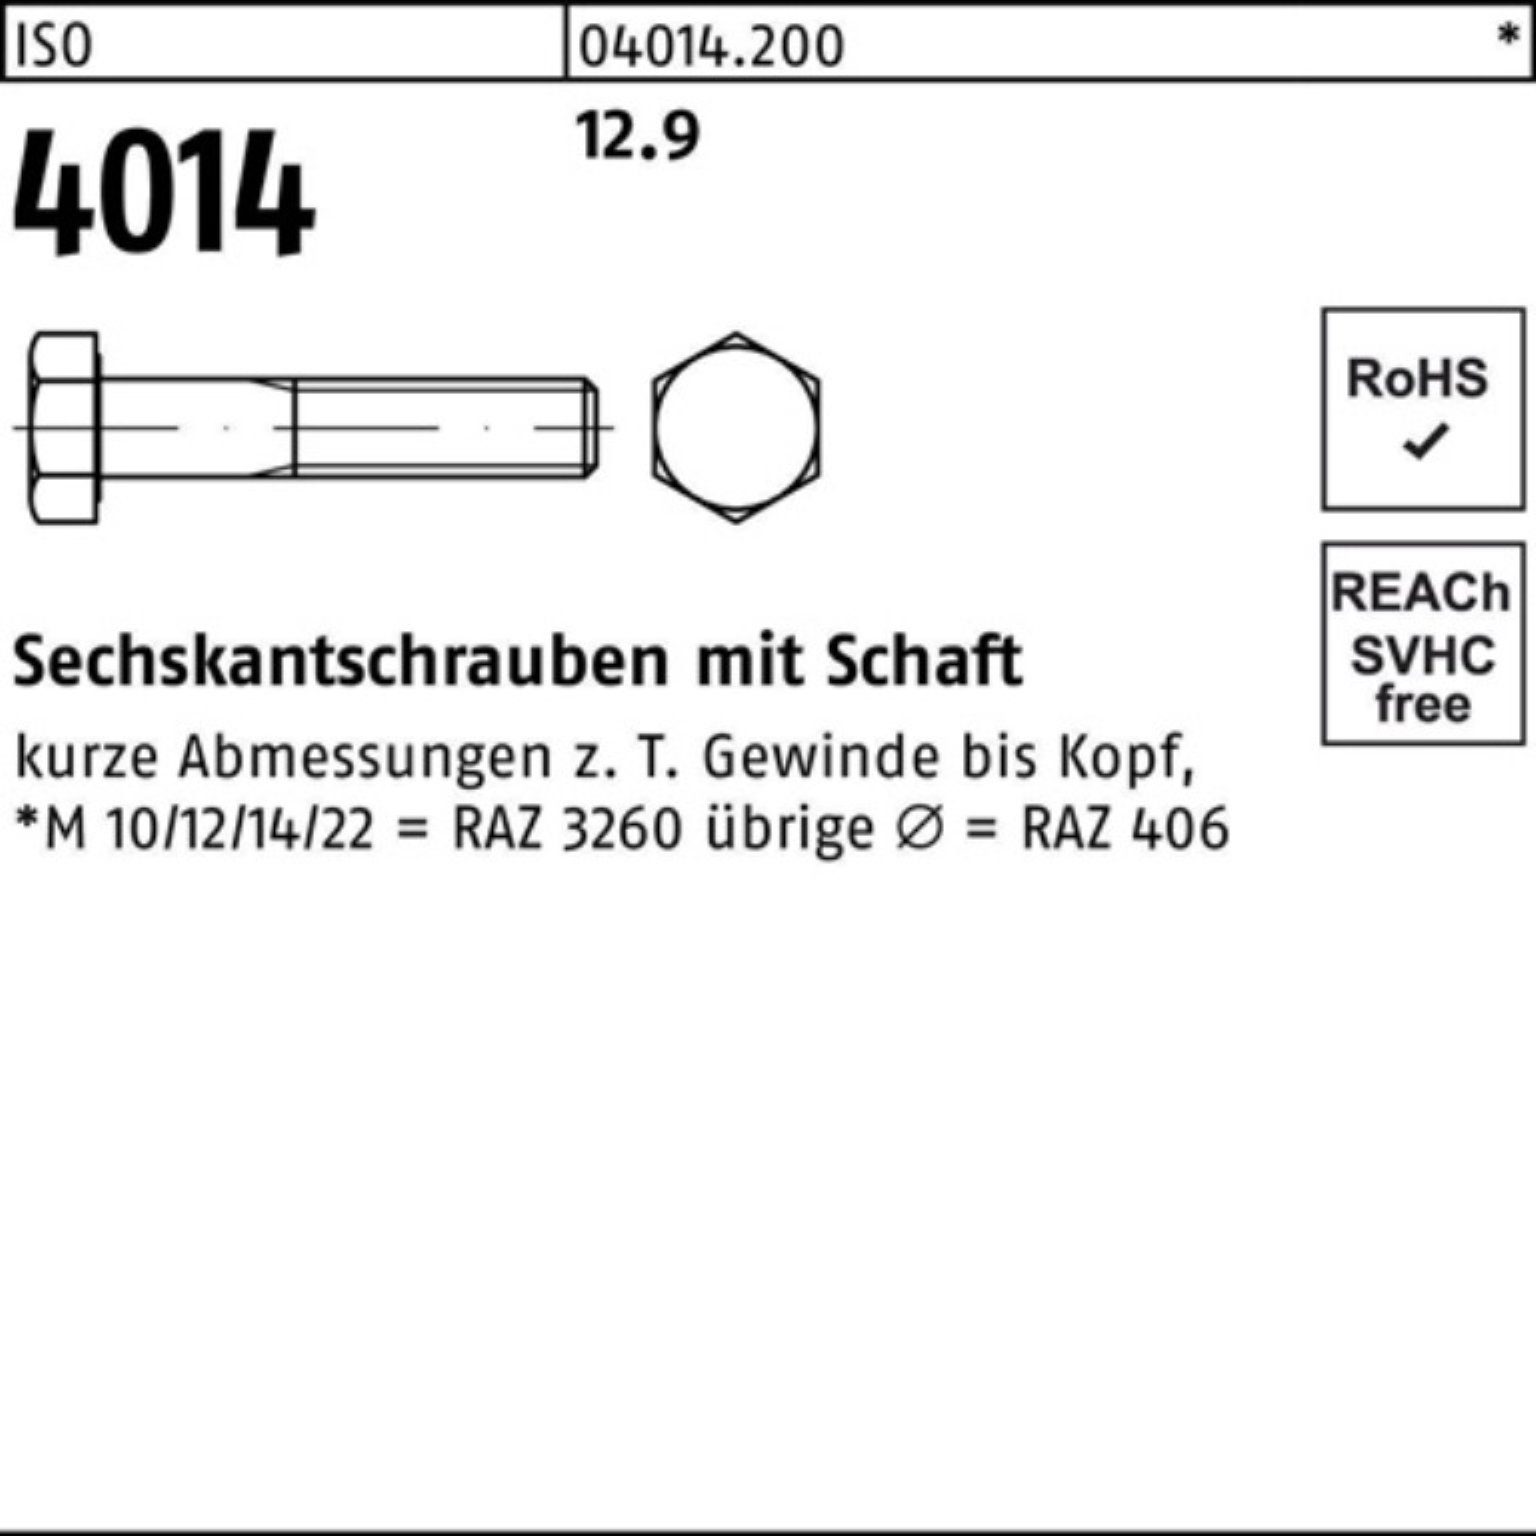 Mit bester Qualität! Bufab Sechskantschraube 100er Pack Sechskantschraube M10x 12.9 4014 I 100 Schaft Stück ISO 40